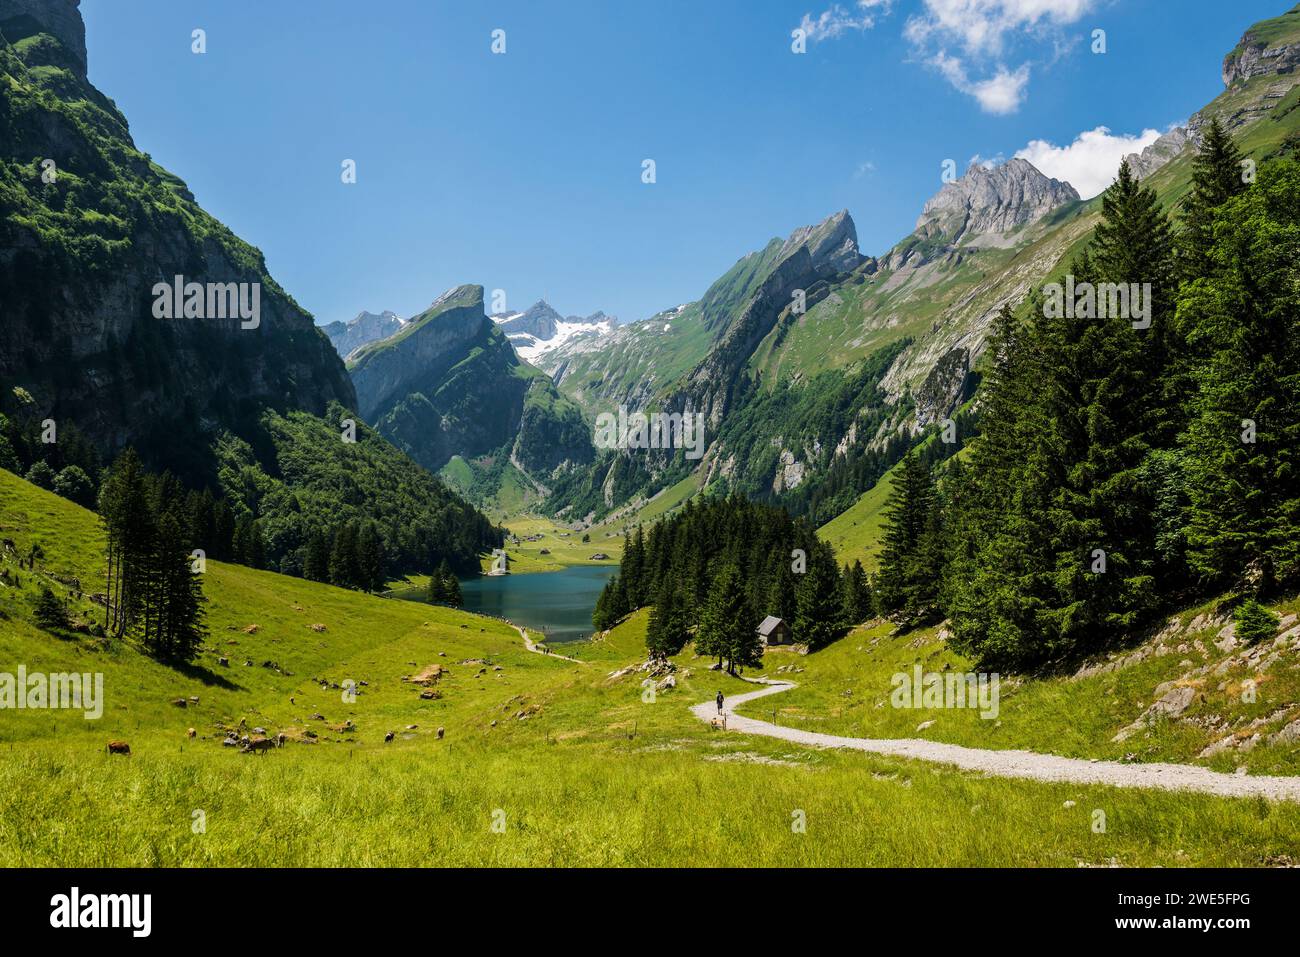 Steep mountains and lake, Seealpsee, Wasserauen, Alpstein, Appenzell Alps, Canton of Appenzell Innerrhoden, Switzerland Stock Photo